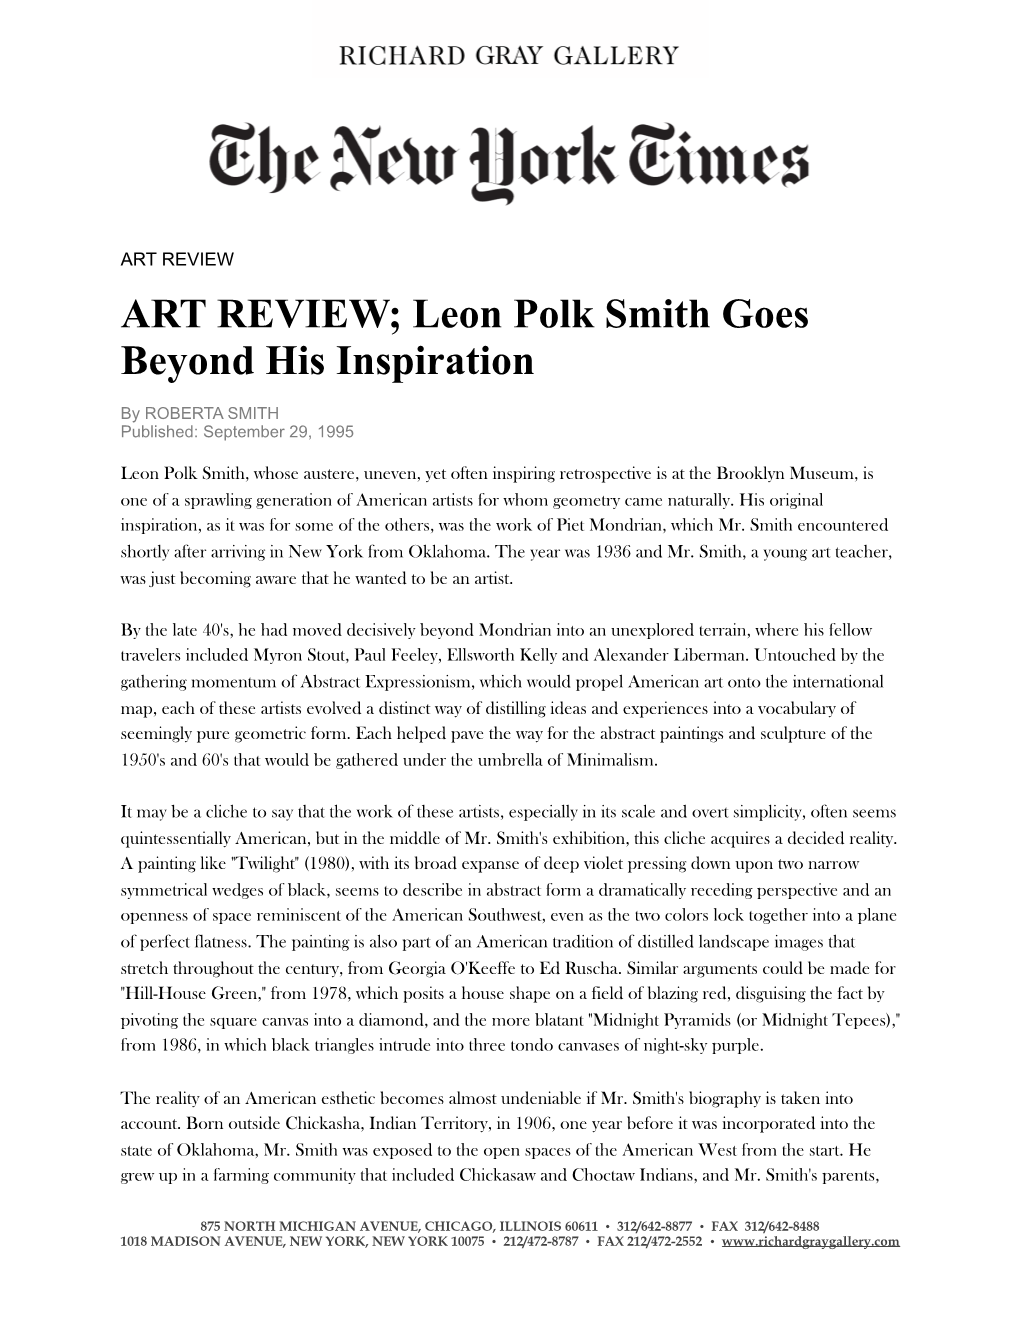 Leon Polk Smith Goes Beyond His Inspiration September 29, 1995